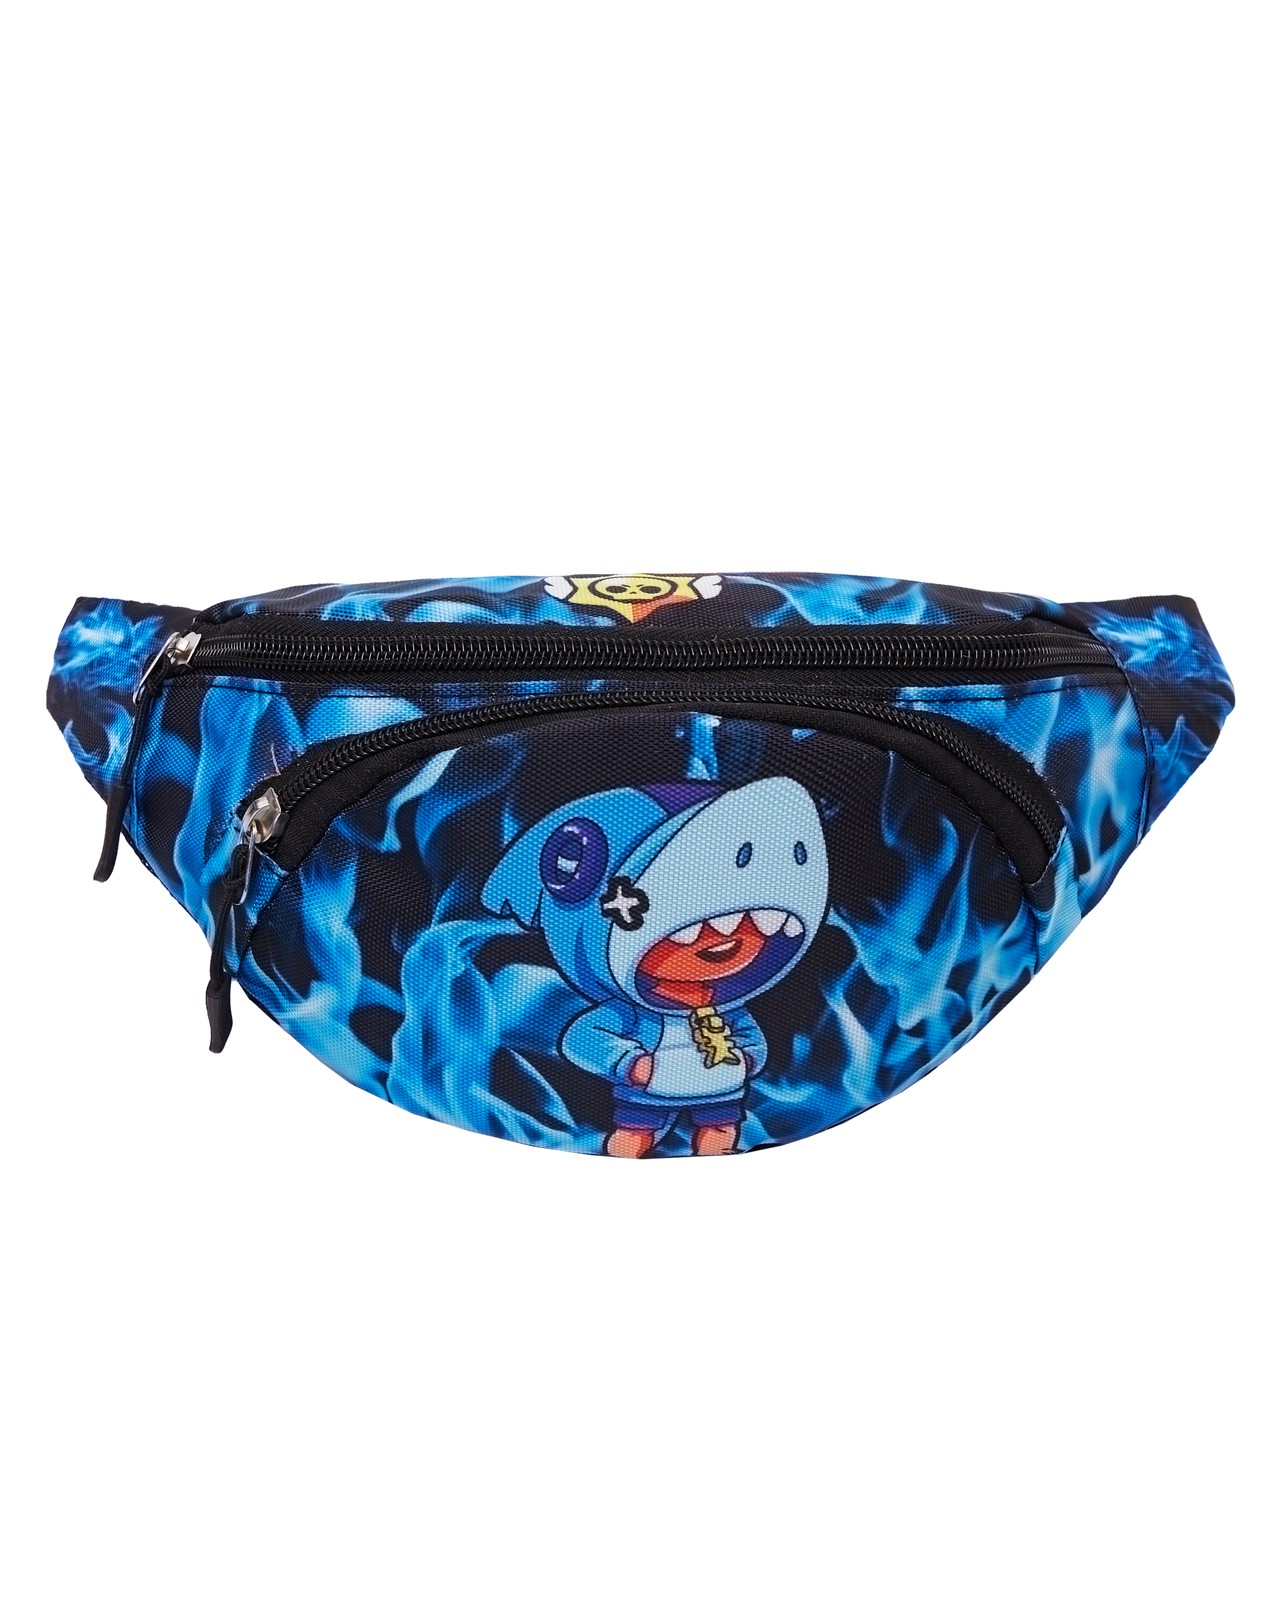 Детская сумка на пояс BAGS-ART Brawl Акула пламя сине-черная сумка на пояс bags art frozen холодное сердце голубой